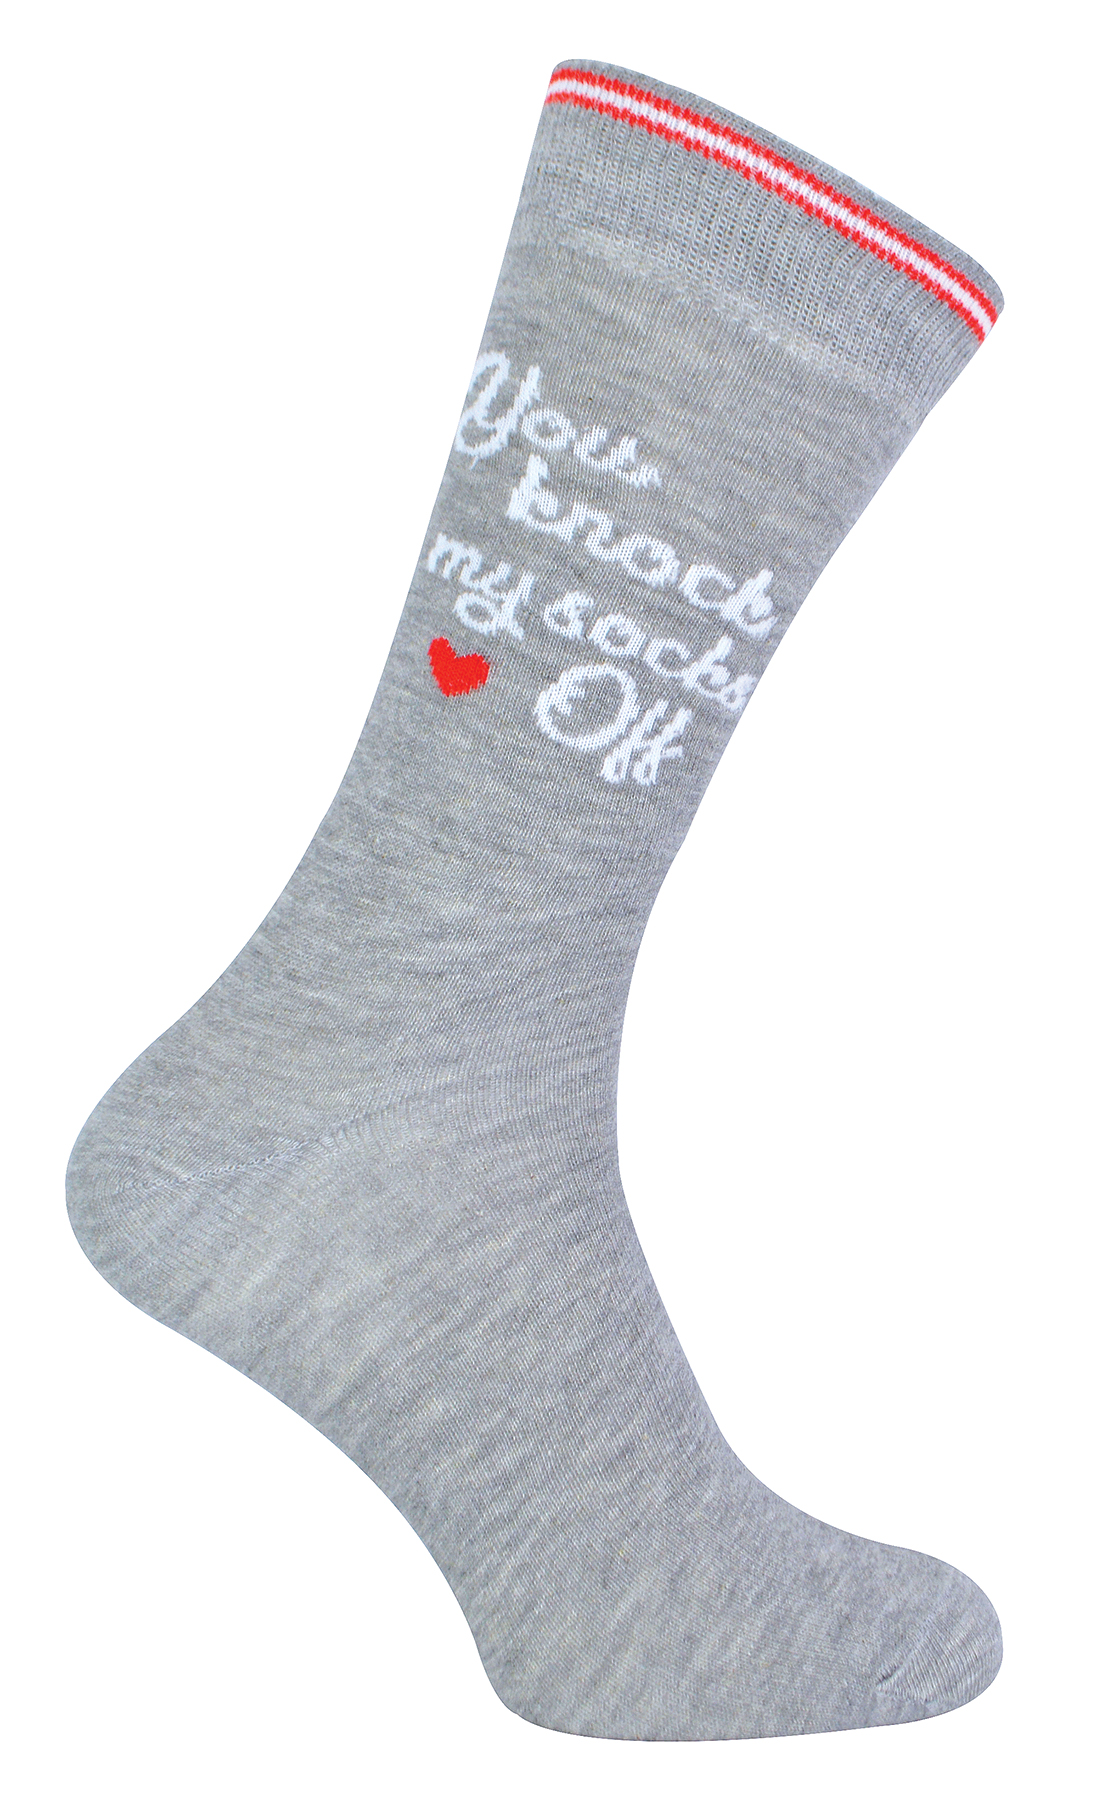 Urban Eccentric Flirty Socks Knock Your Socks Off 1